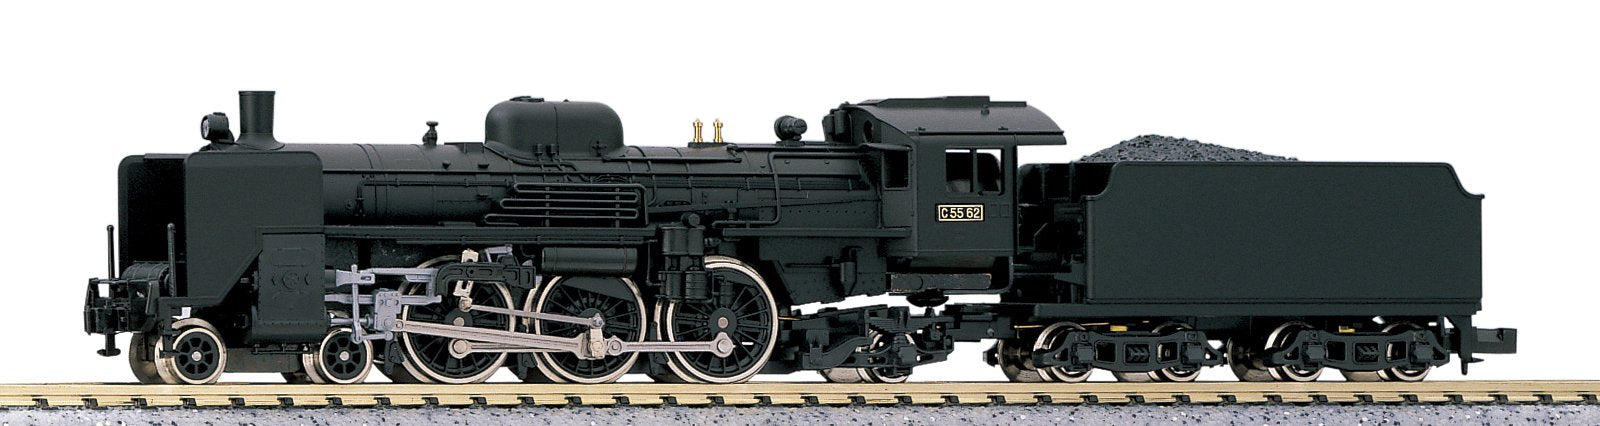 Kato N Gauge C55 2011 Model - Classic Steam Locomotive Railway Toy